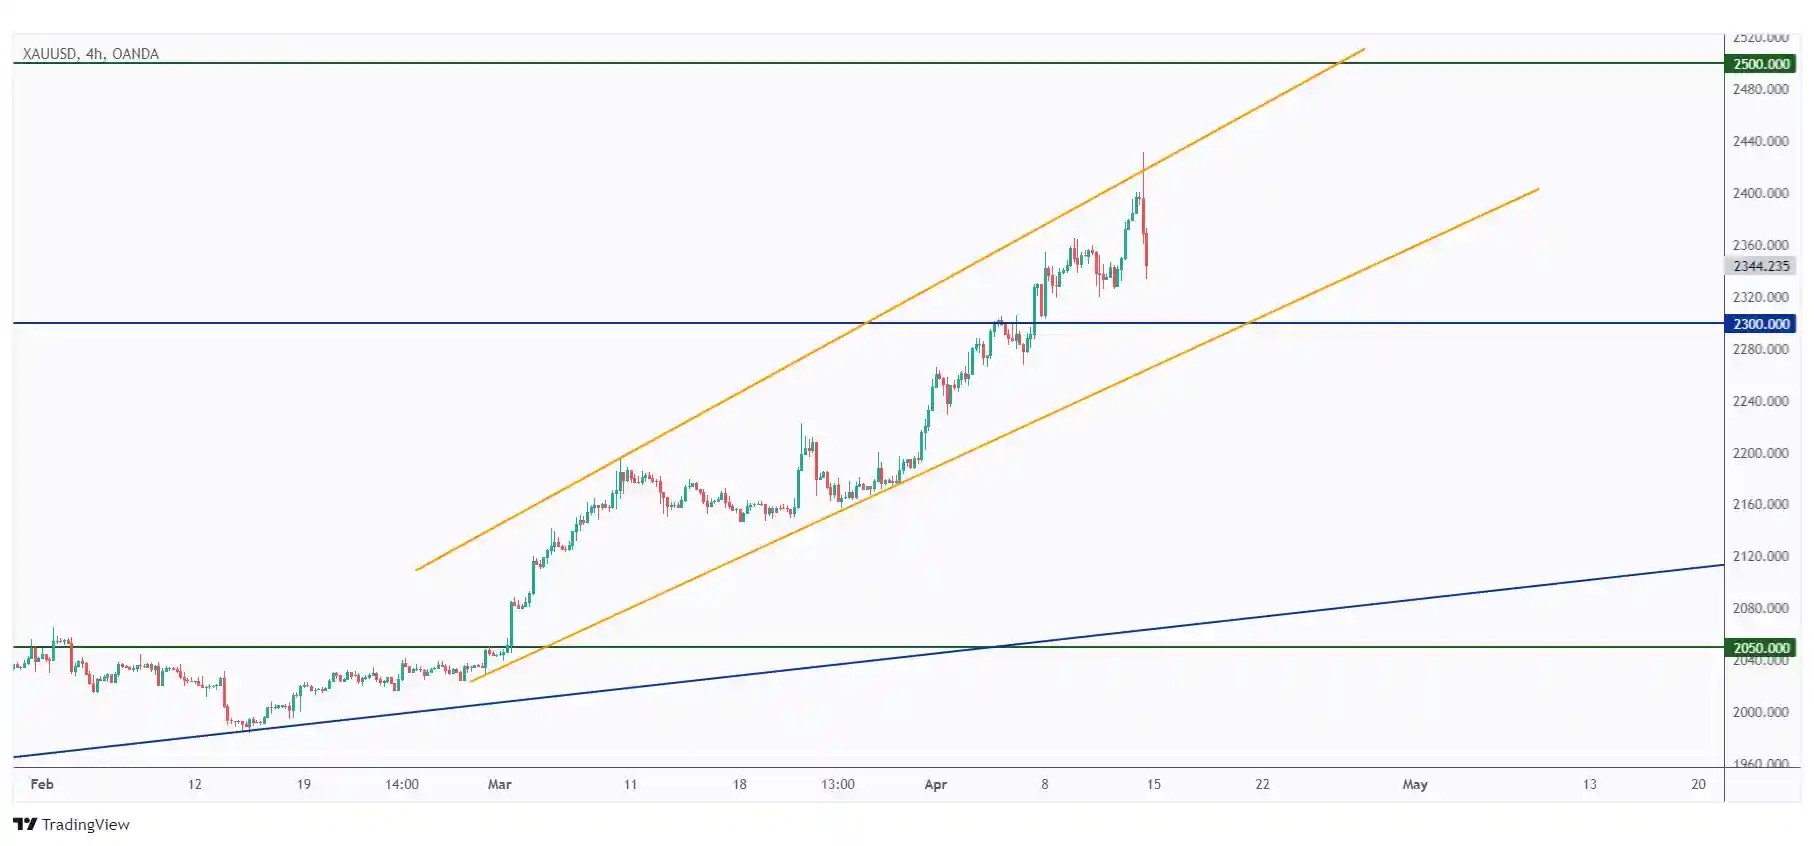 Gold 4h chart bullish medium-term trading within a rising channel.